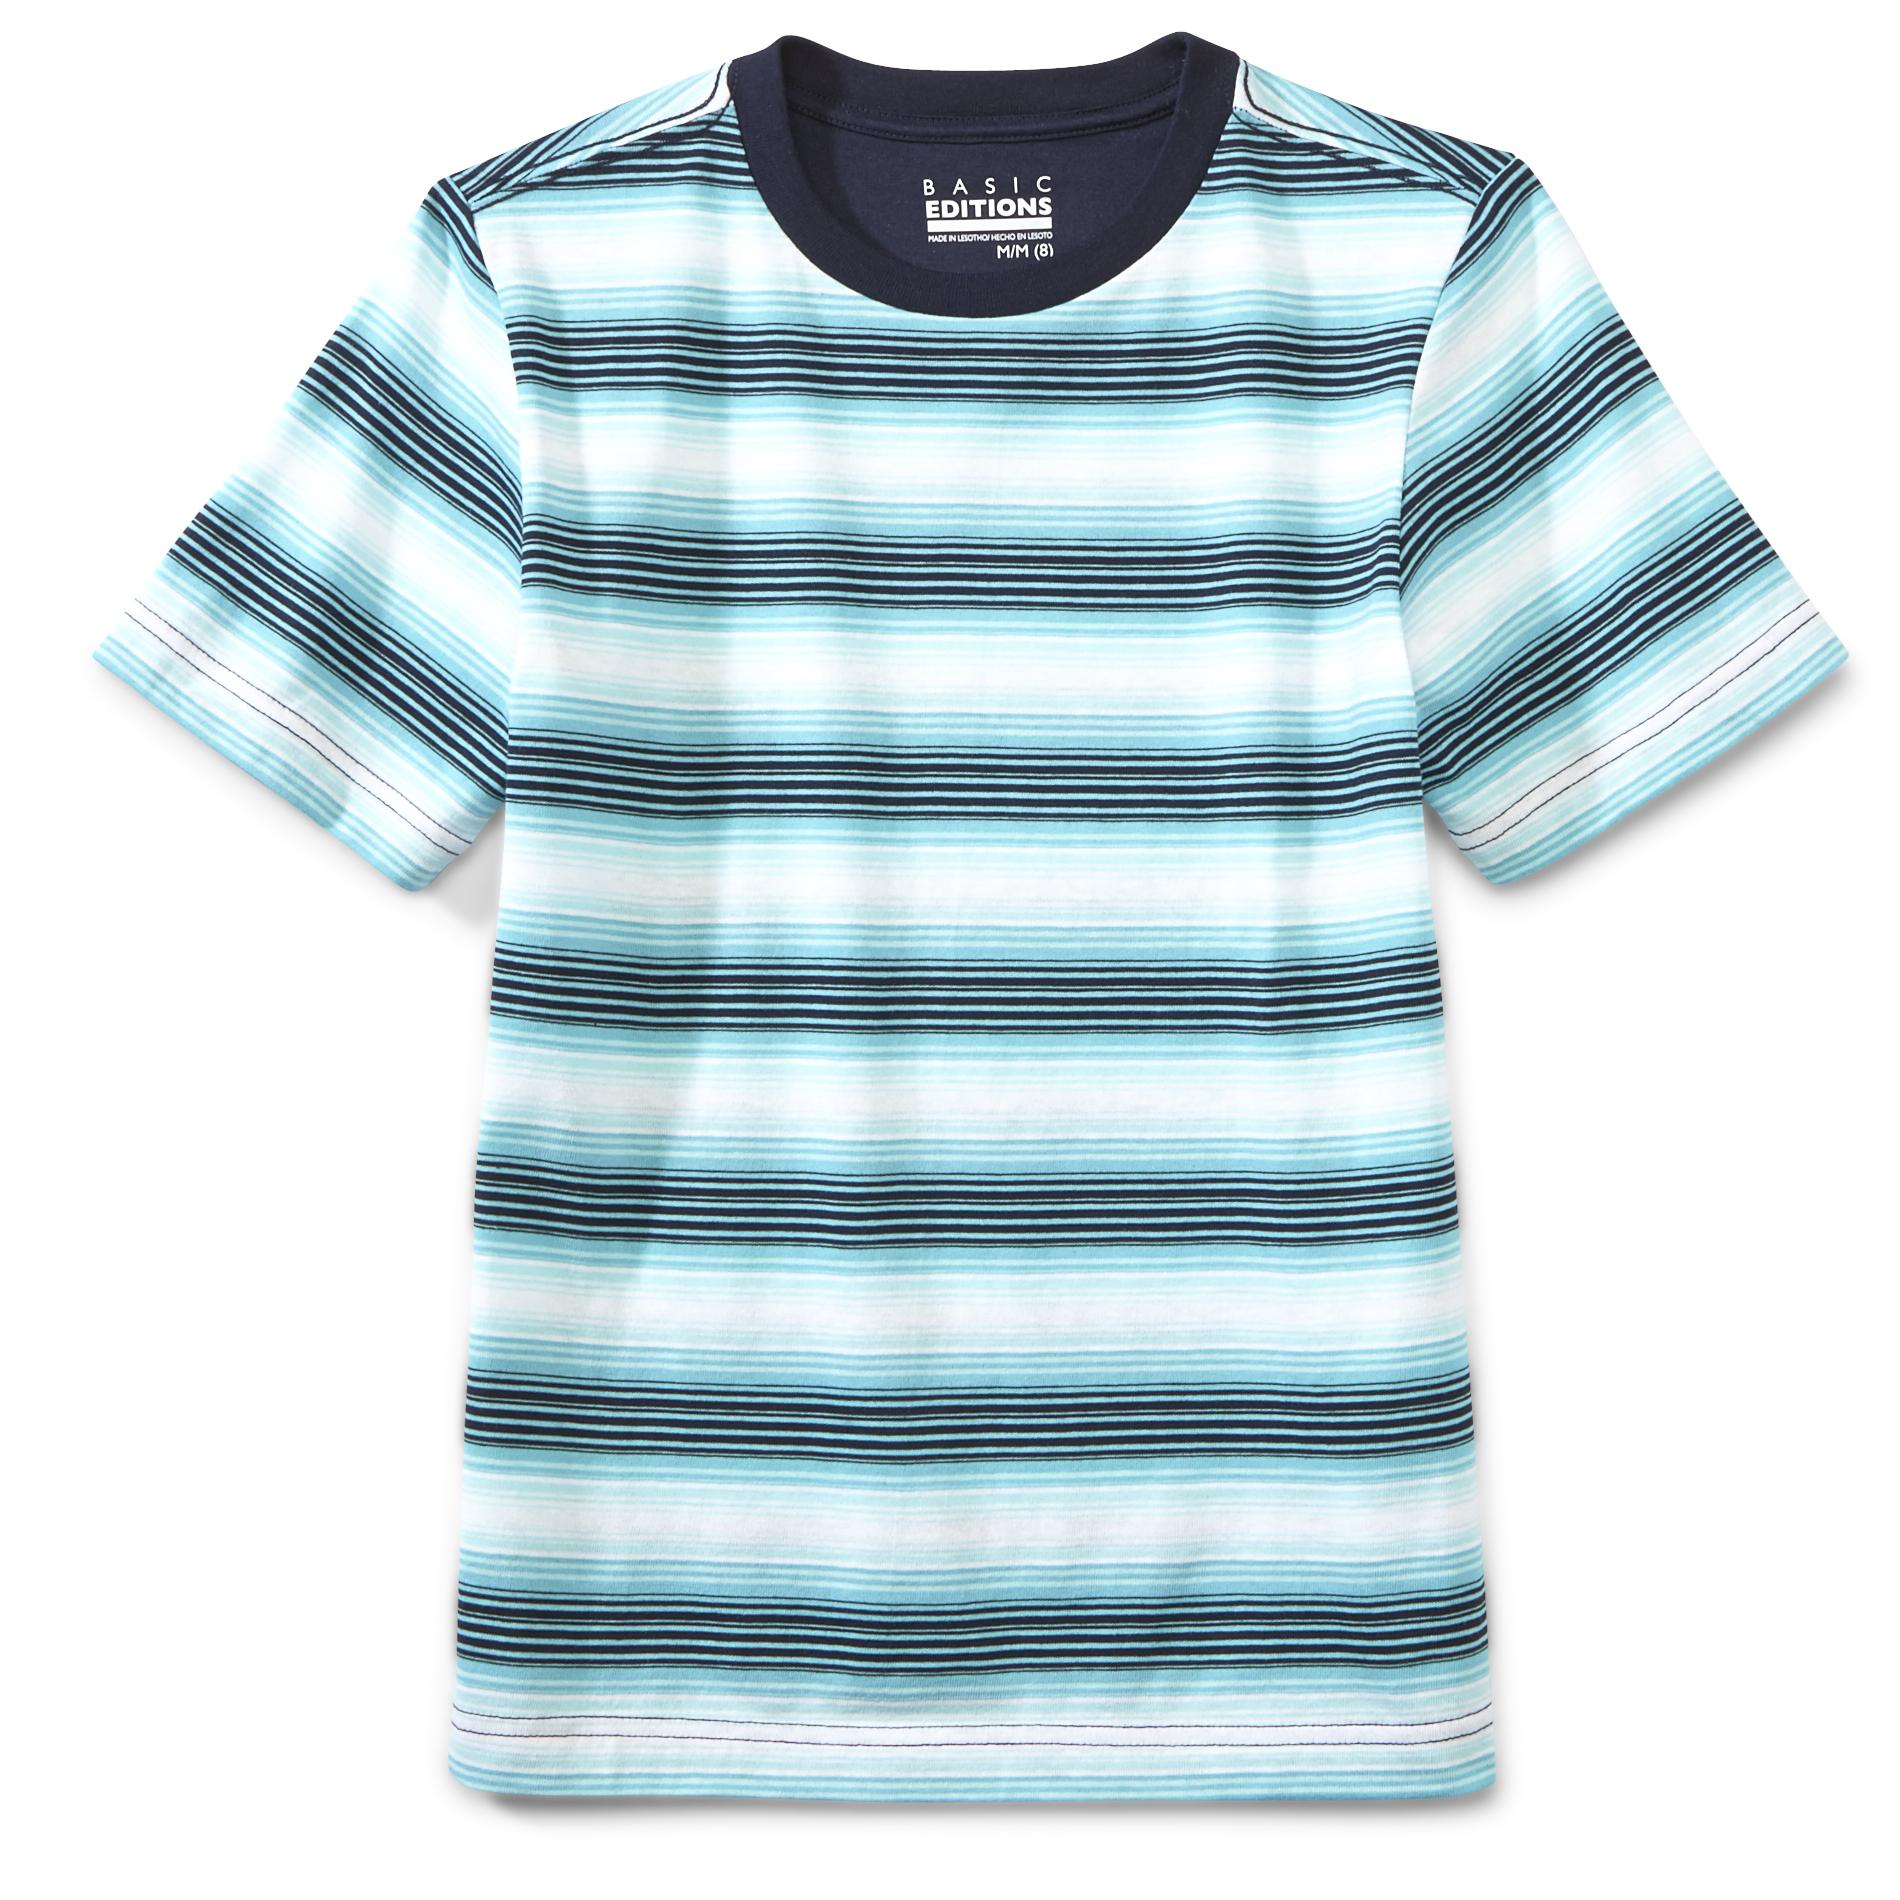 Basic Editions Boy's Crew Neck T-Shirt - Striped